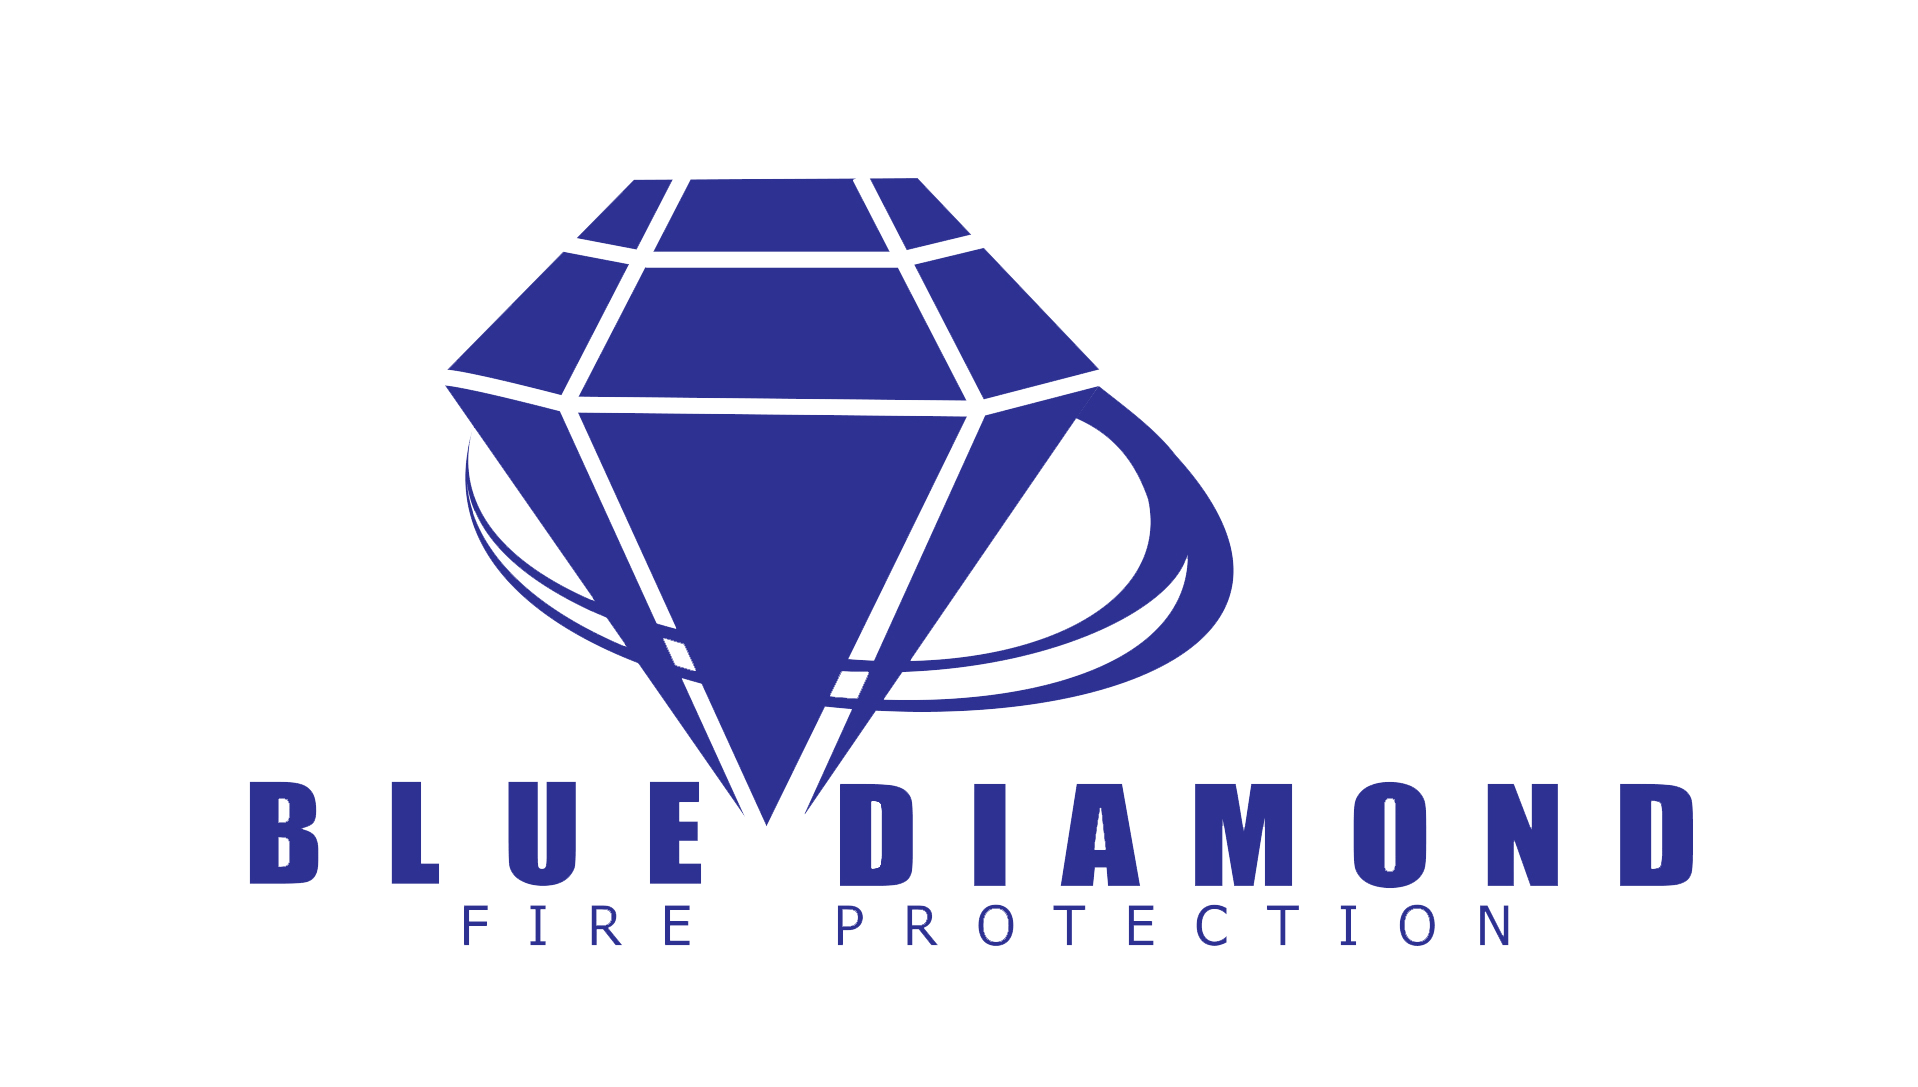 Blue Diamond Company Logo - Company Profile | Blue Diamond Fire Protection